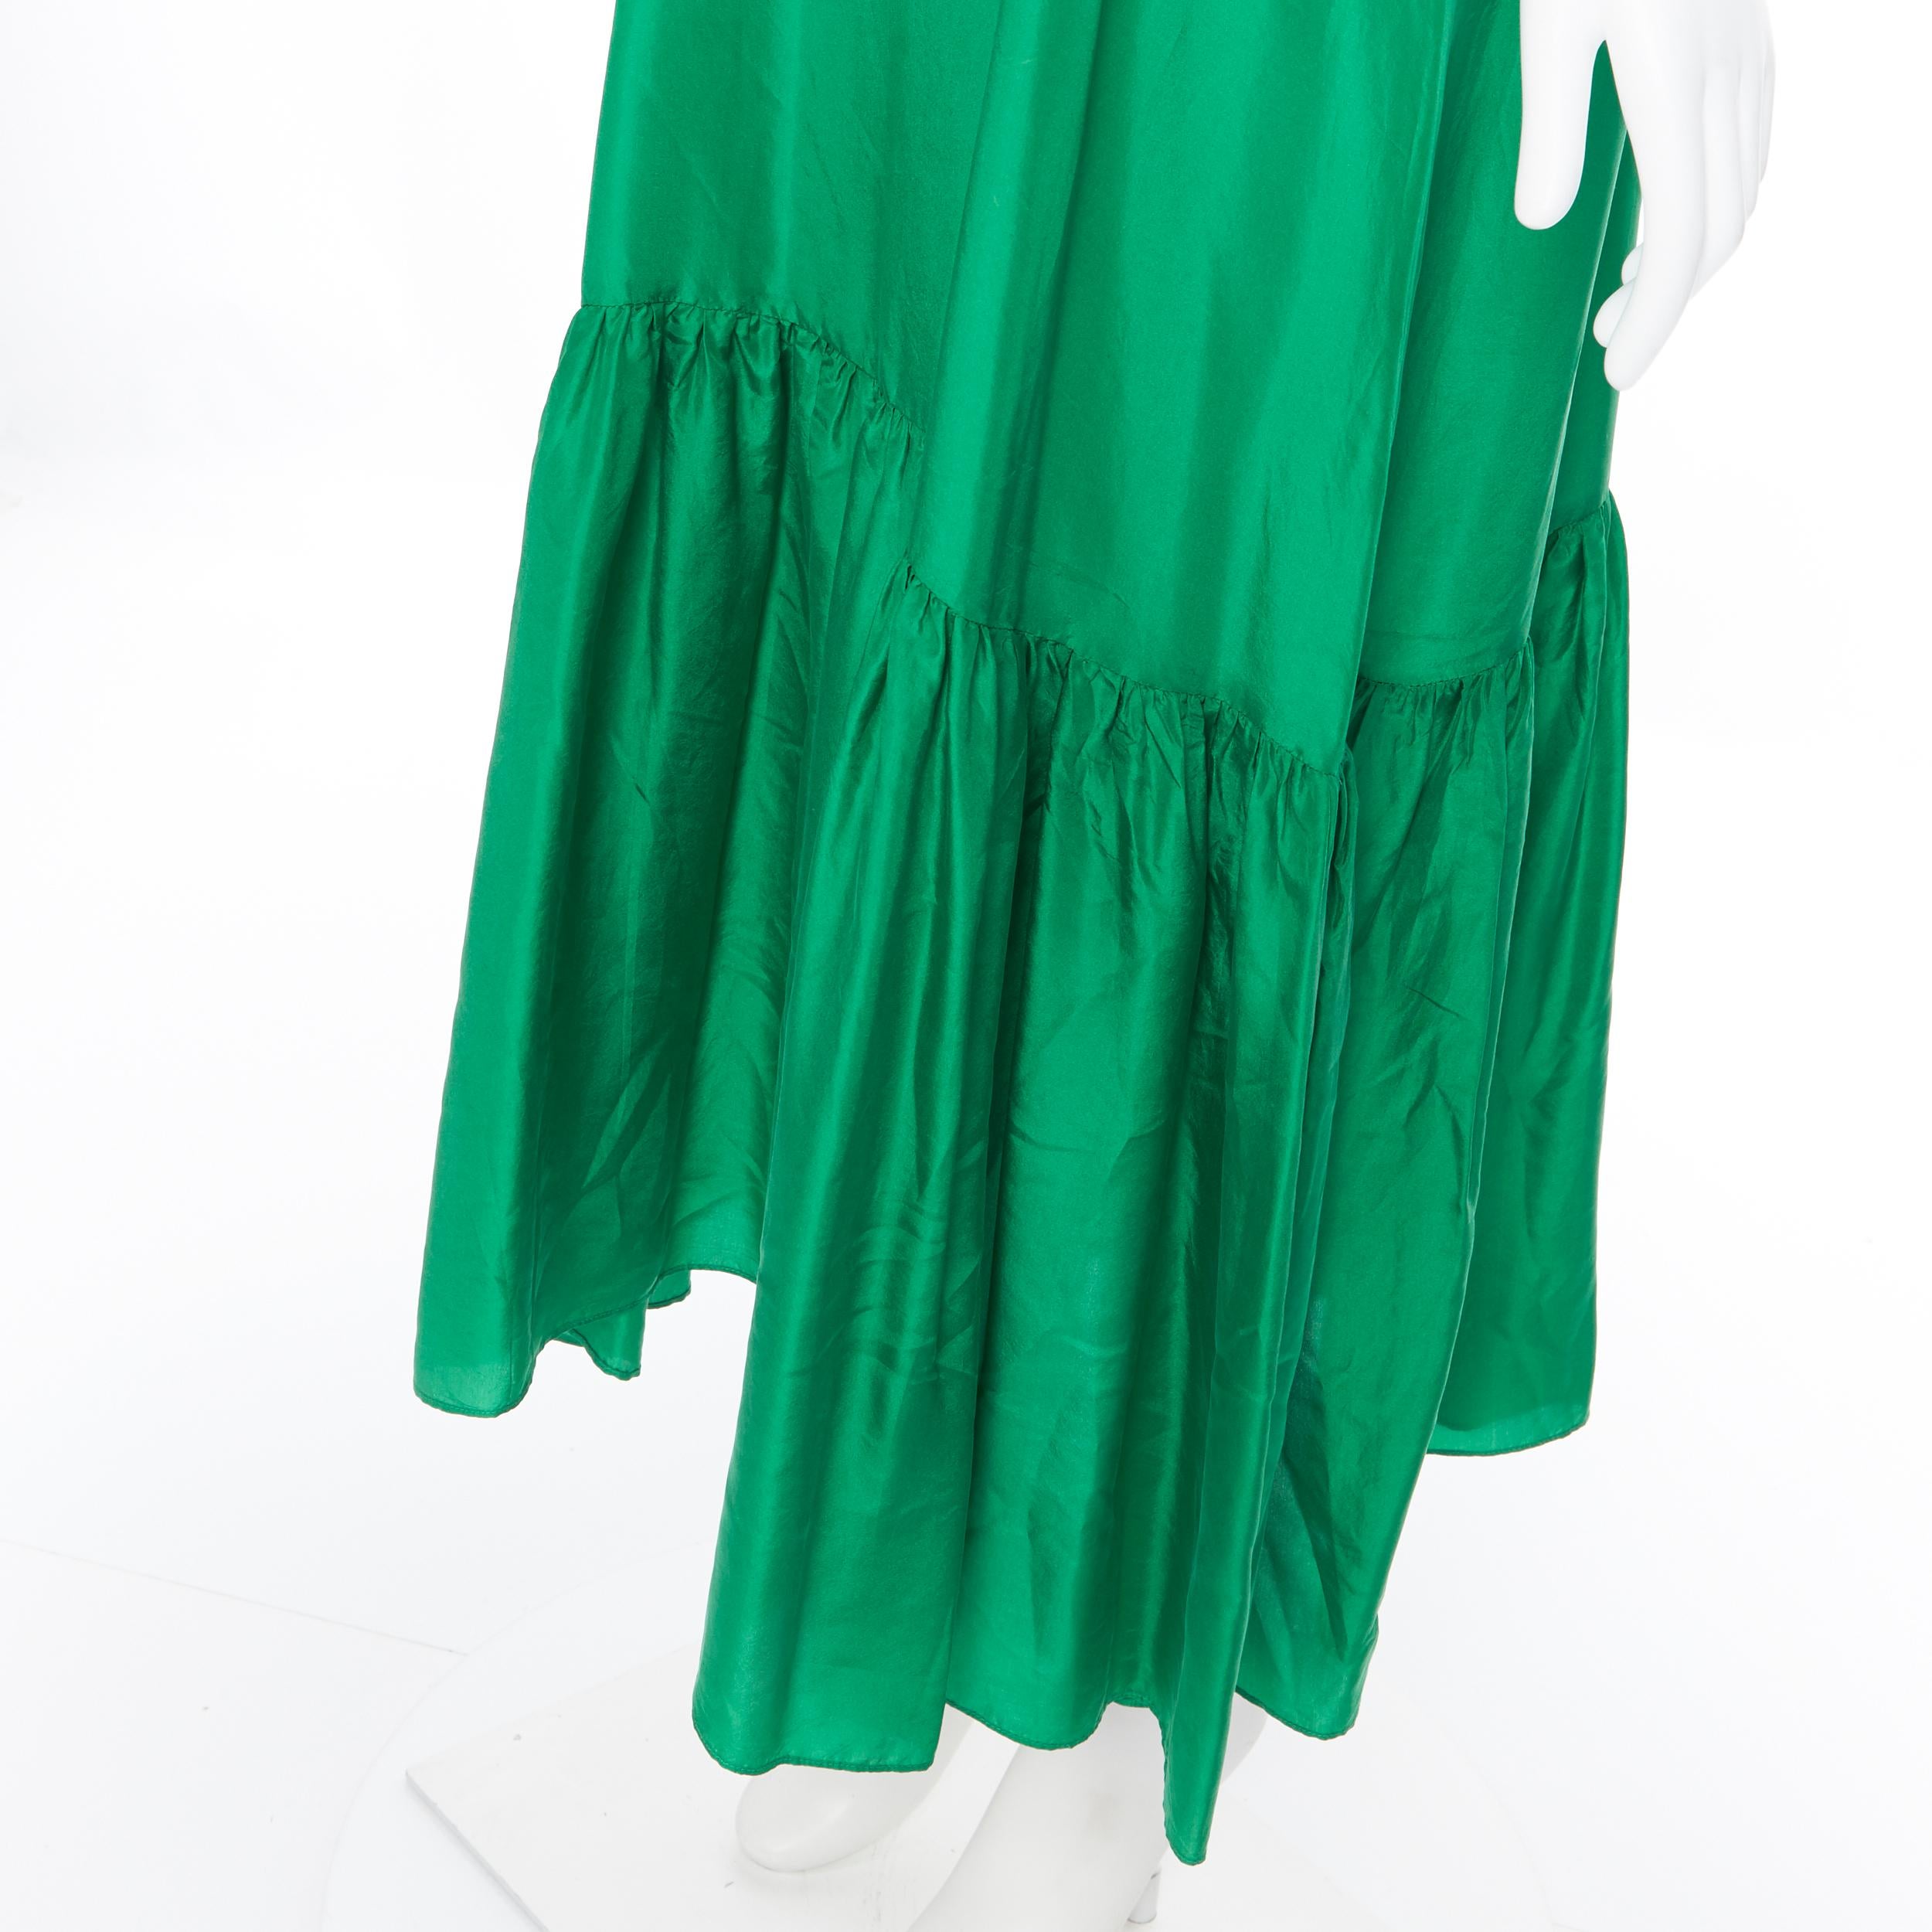 KALITA 100% silk kelly green tiered flared hem tie spaghetti strap maxi dress XS
Brand: Kalita
Model Name / Style: Silk dress
Material: Silk
Color: Green
Pattern: Solid
Extra Detail: Self tie spaghetti straps. Sleeveless. Scoop neck neckline.